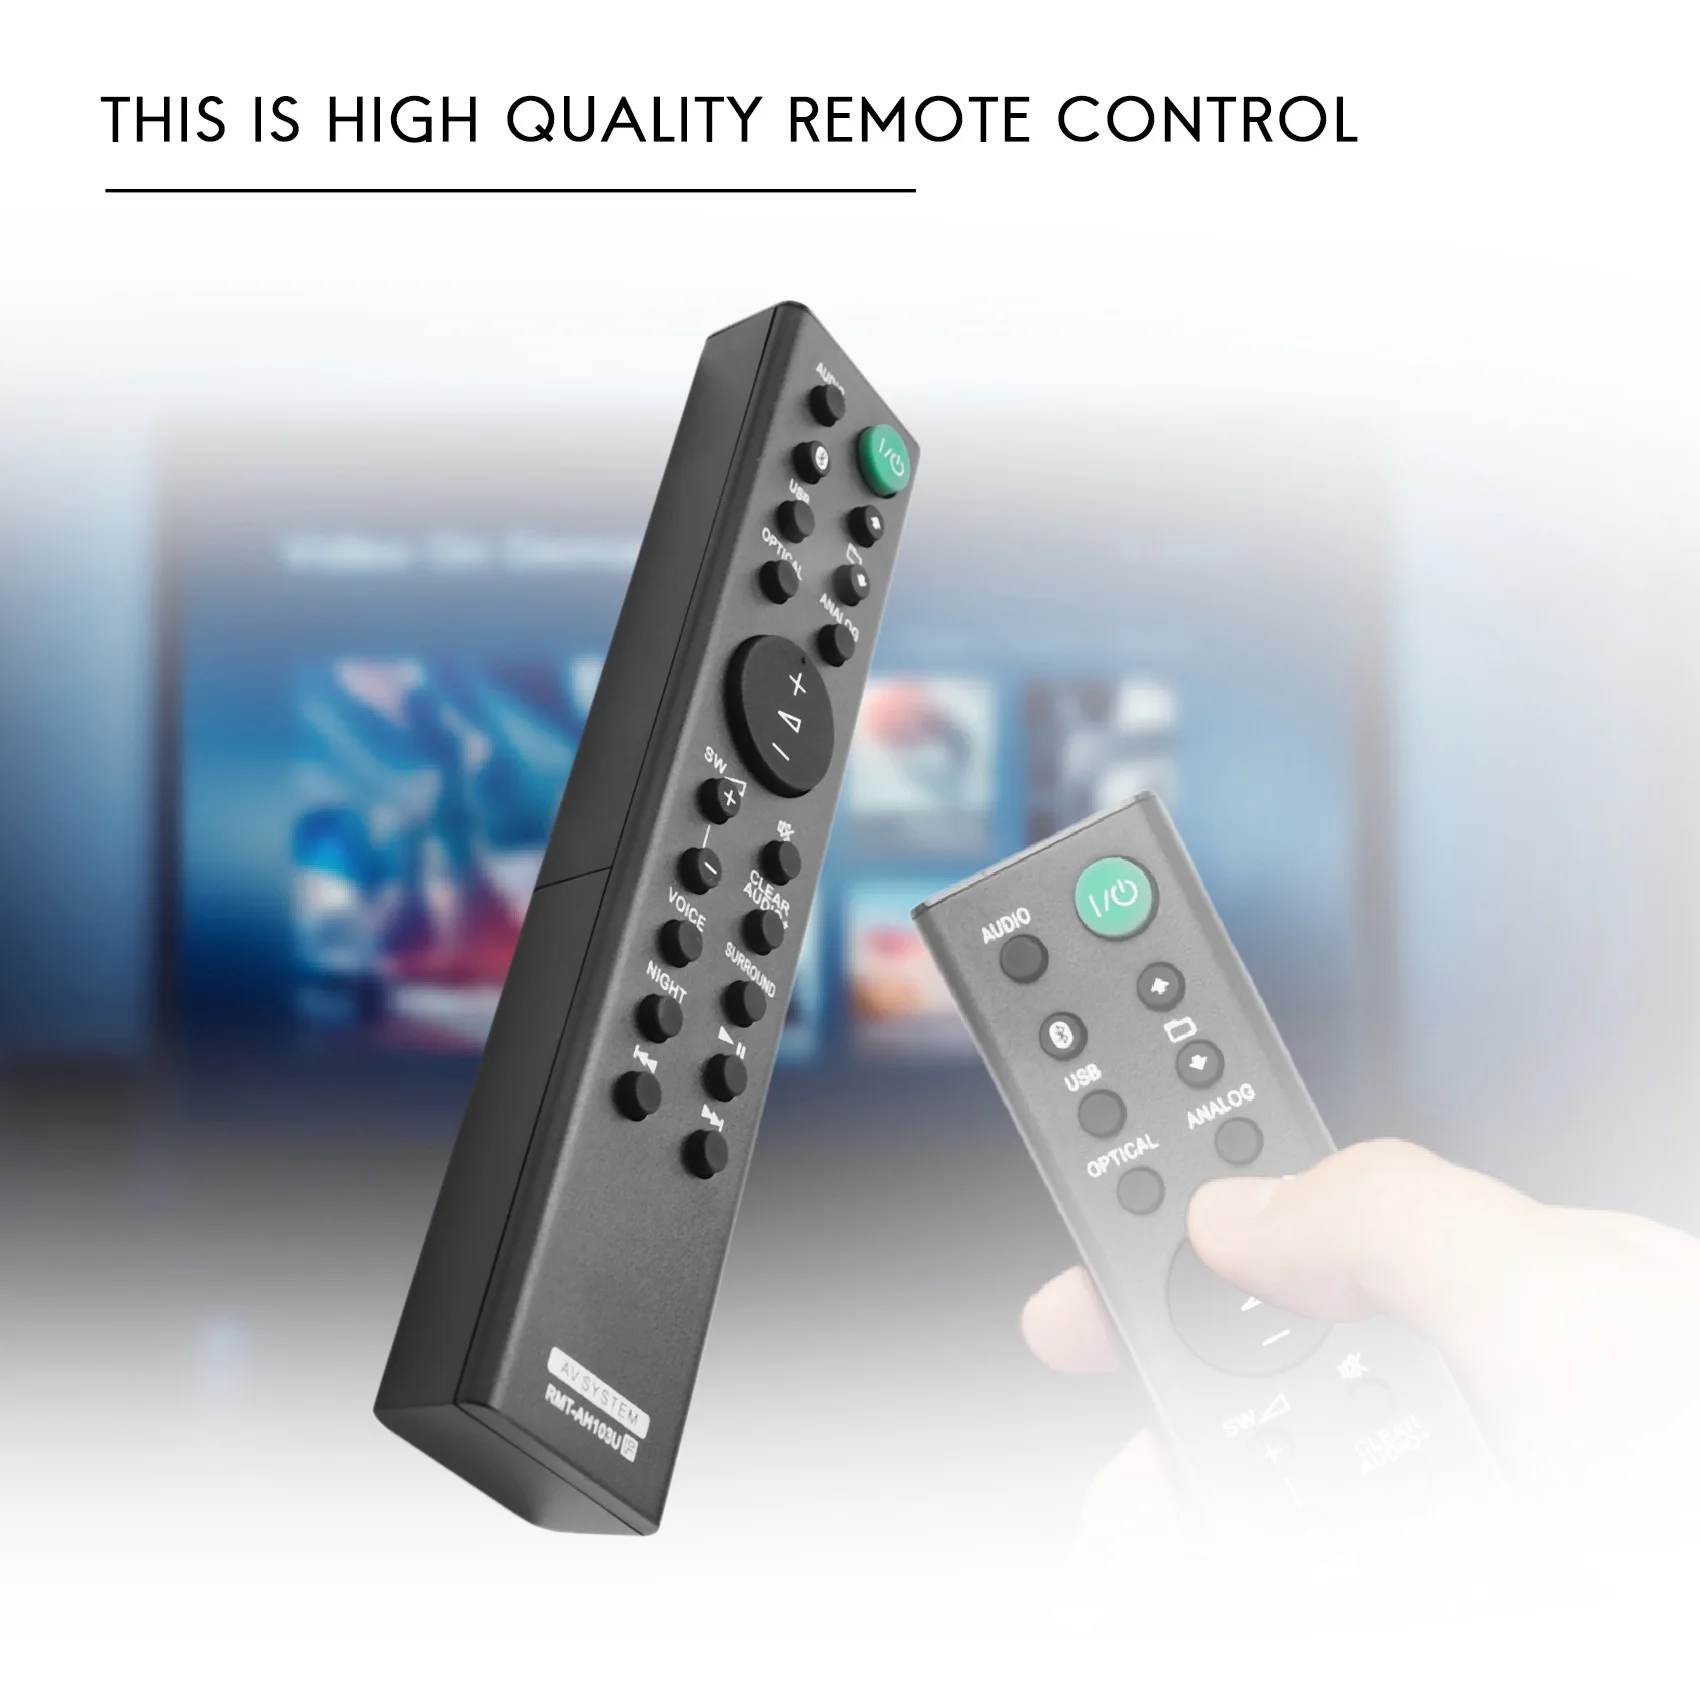 -AH103U Remote Control for Sound Bar HT-CT80 SA-CT80 HTCT80 SACT80 -WCT80 RMTAH103U